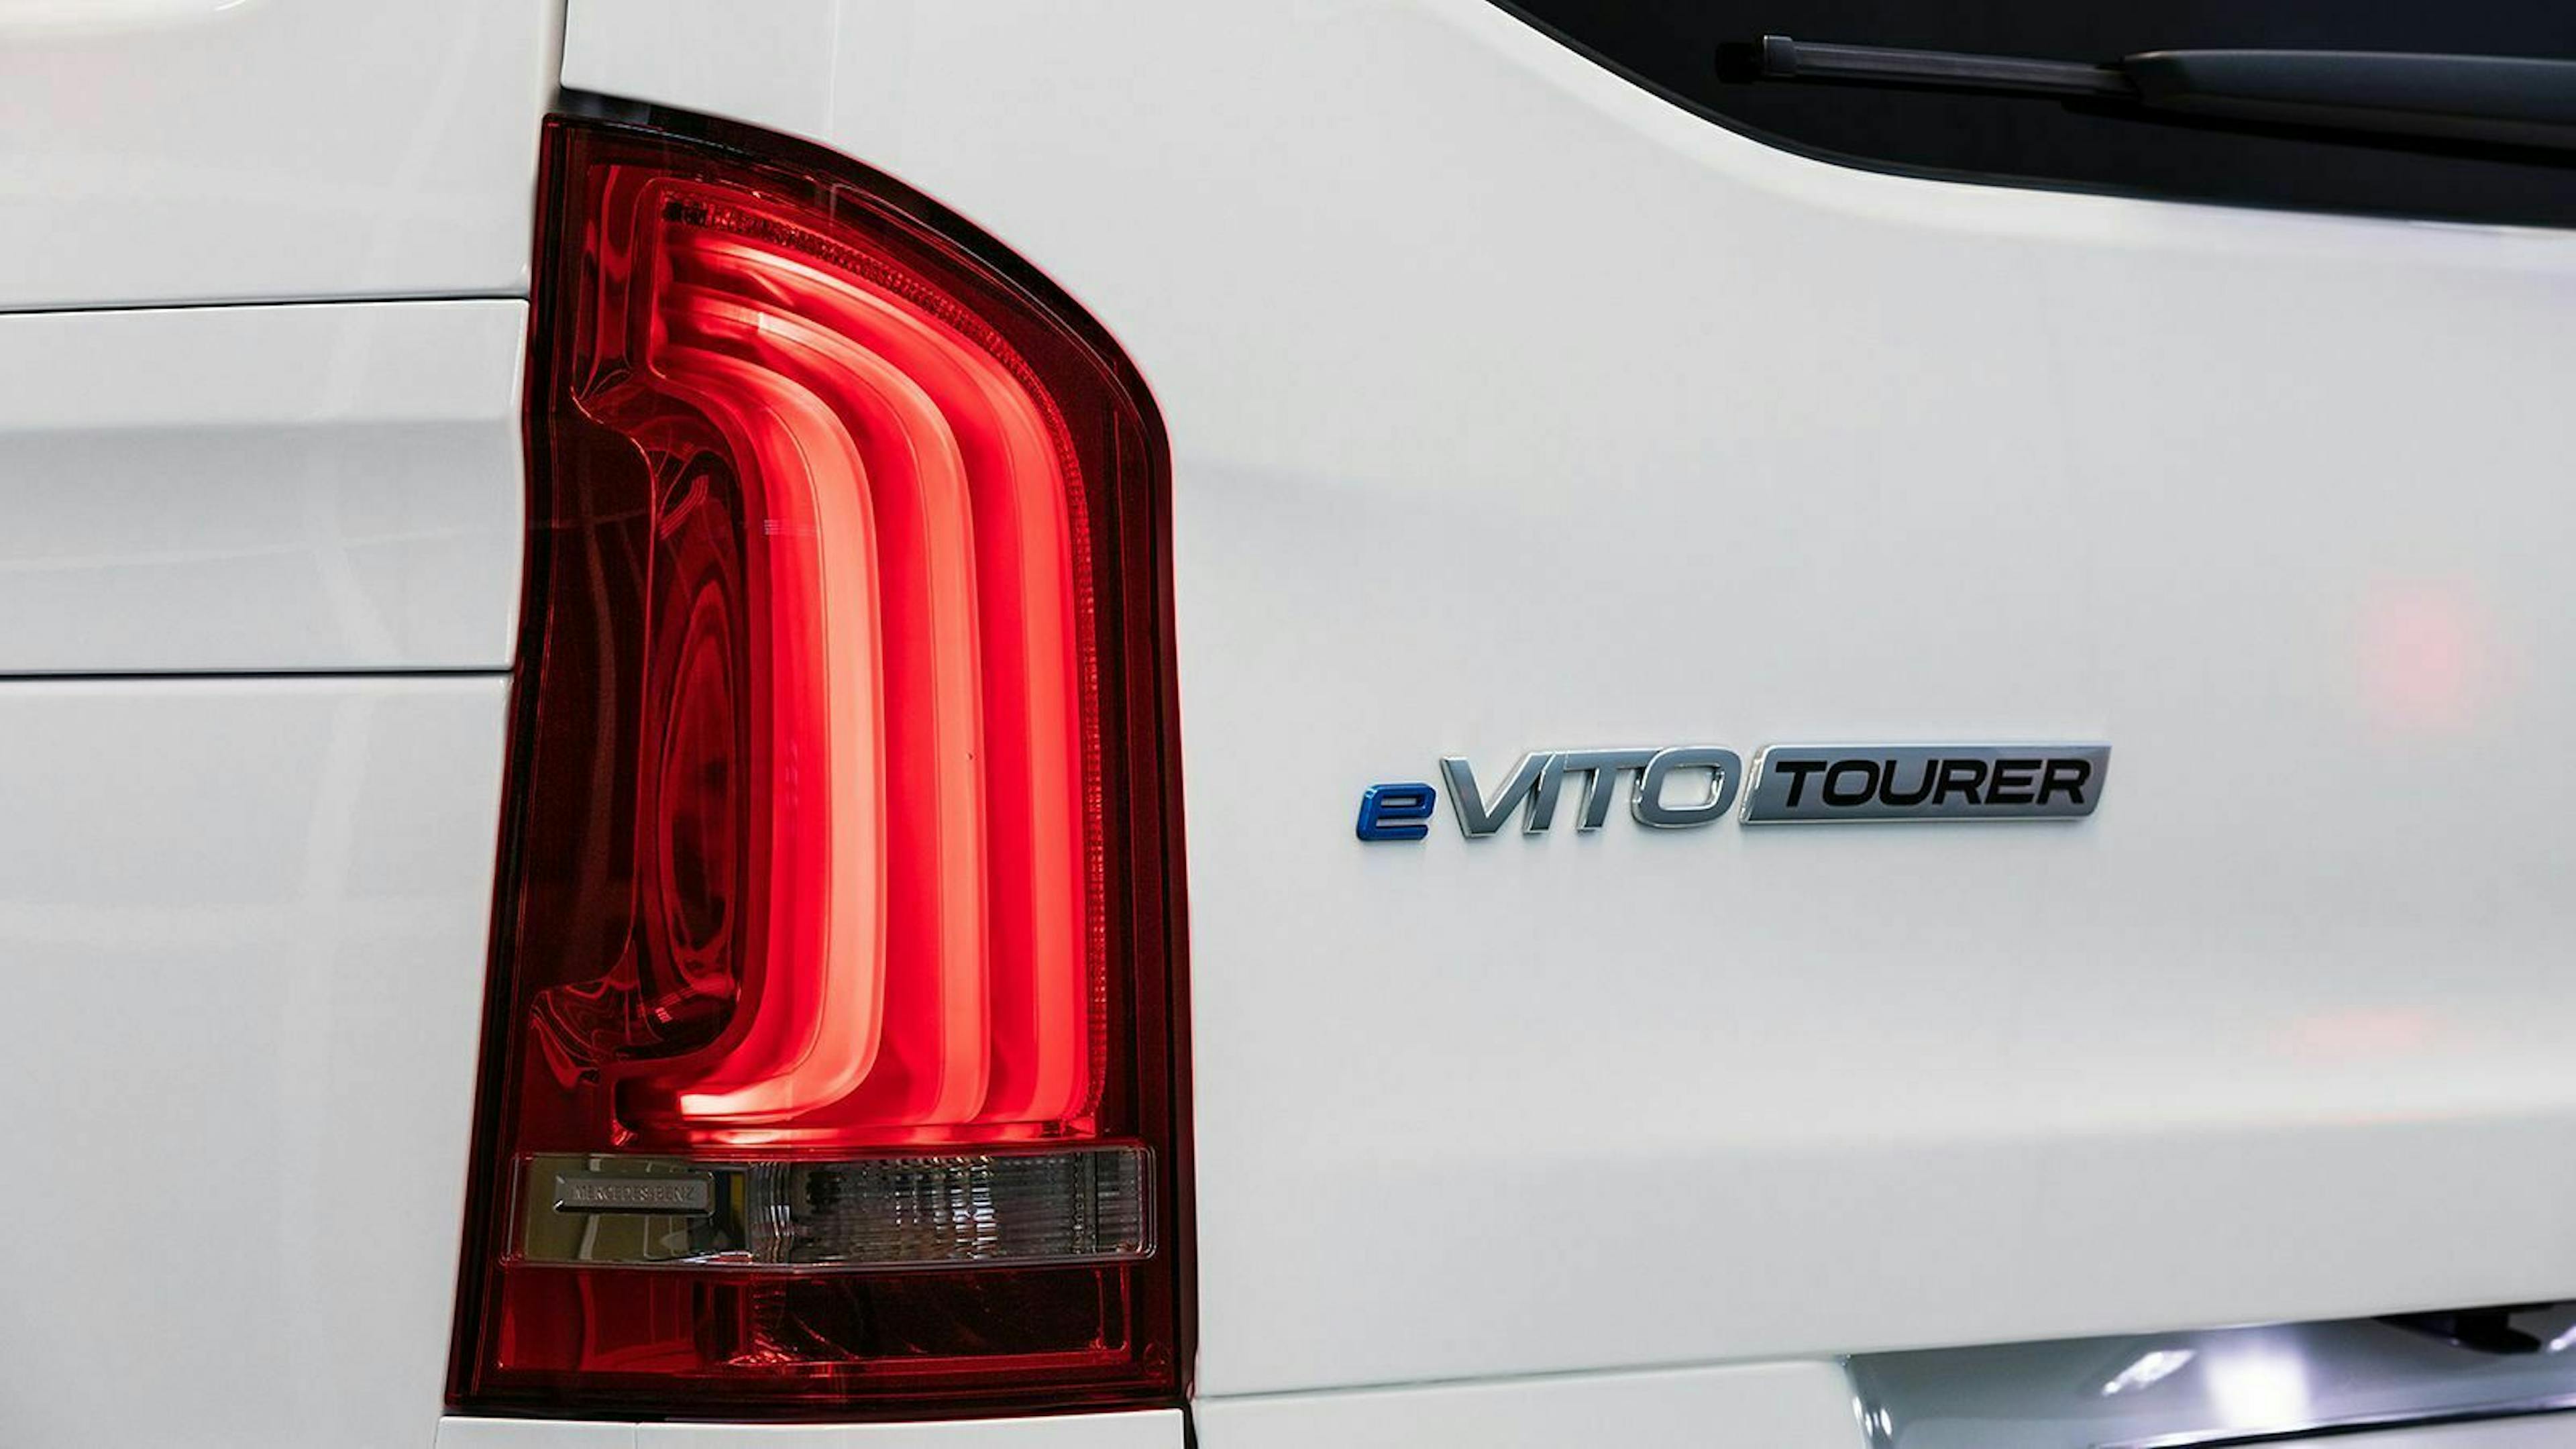 Mercedes-Benz Vito Detailaufnahme des eVito Tourer Emblems